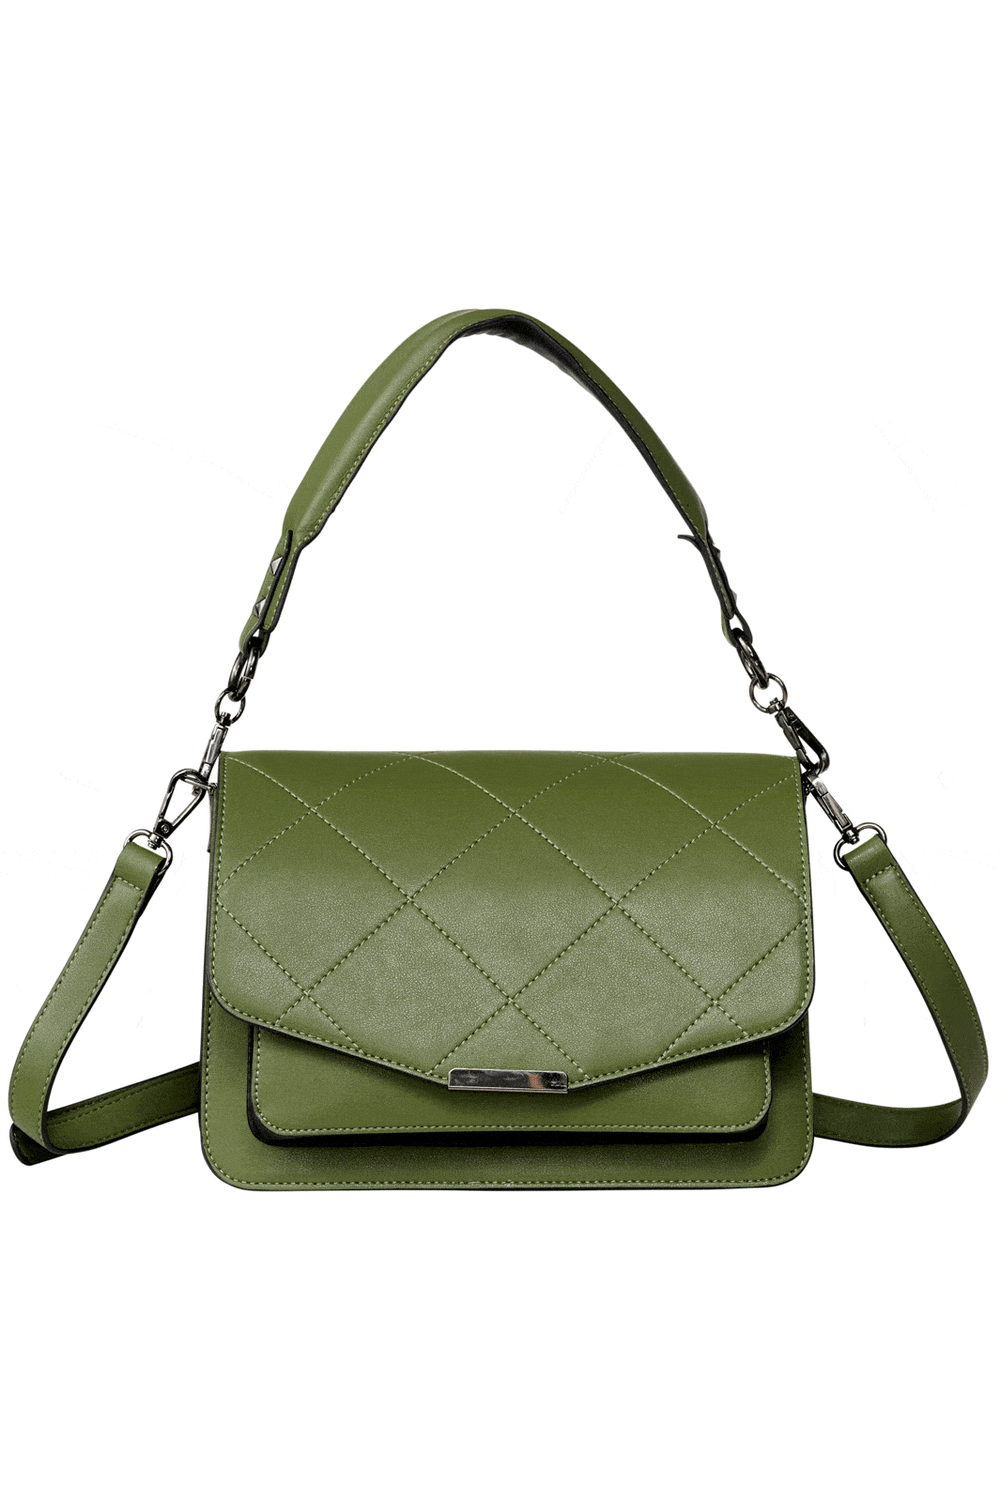 Noella - Blanca Multi Compartment Bag - Green Leather Look Tasker 